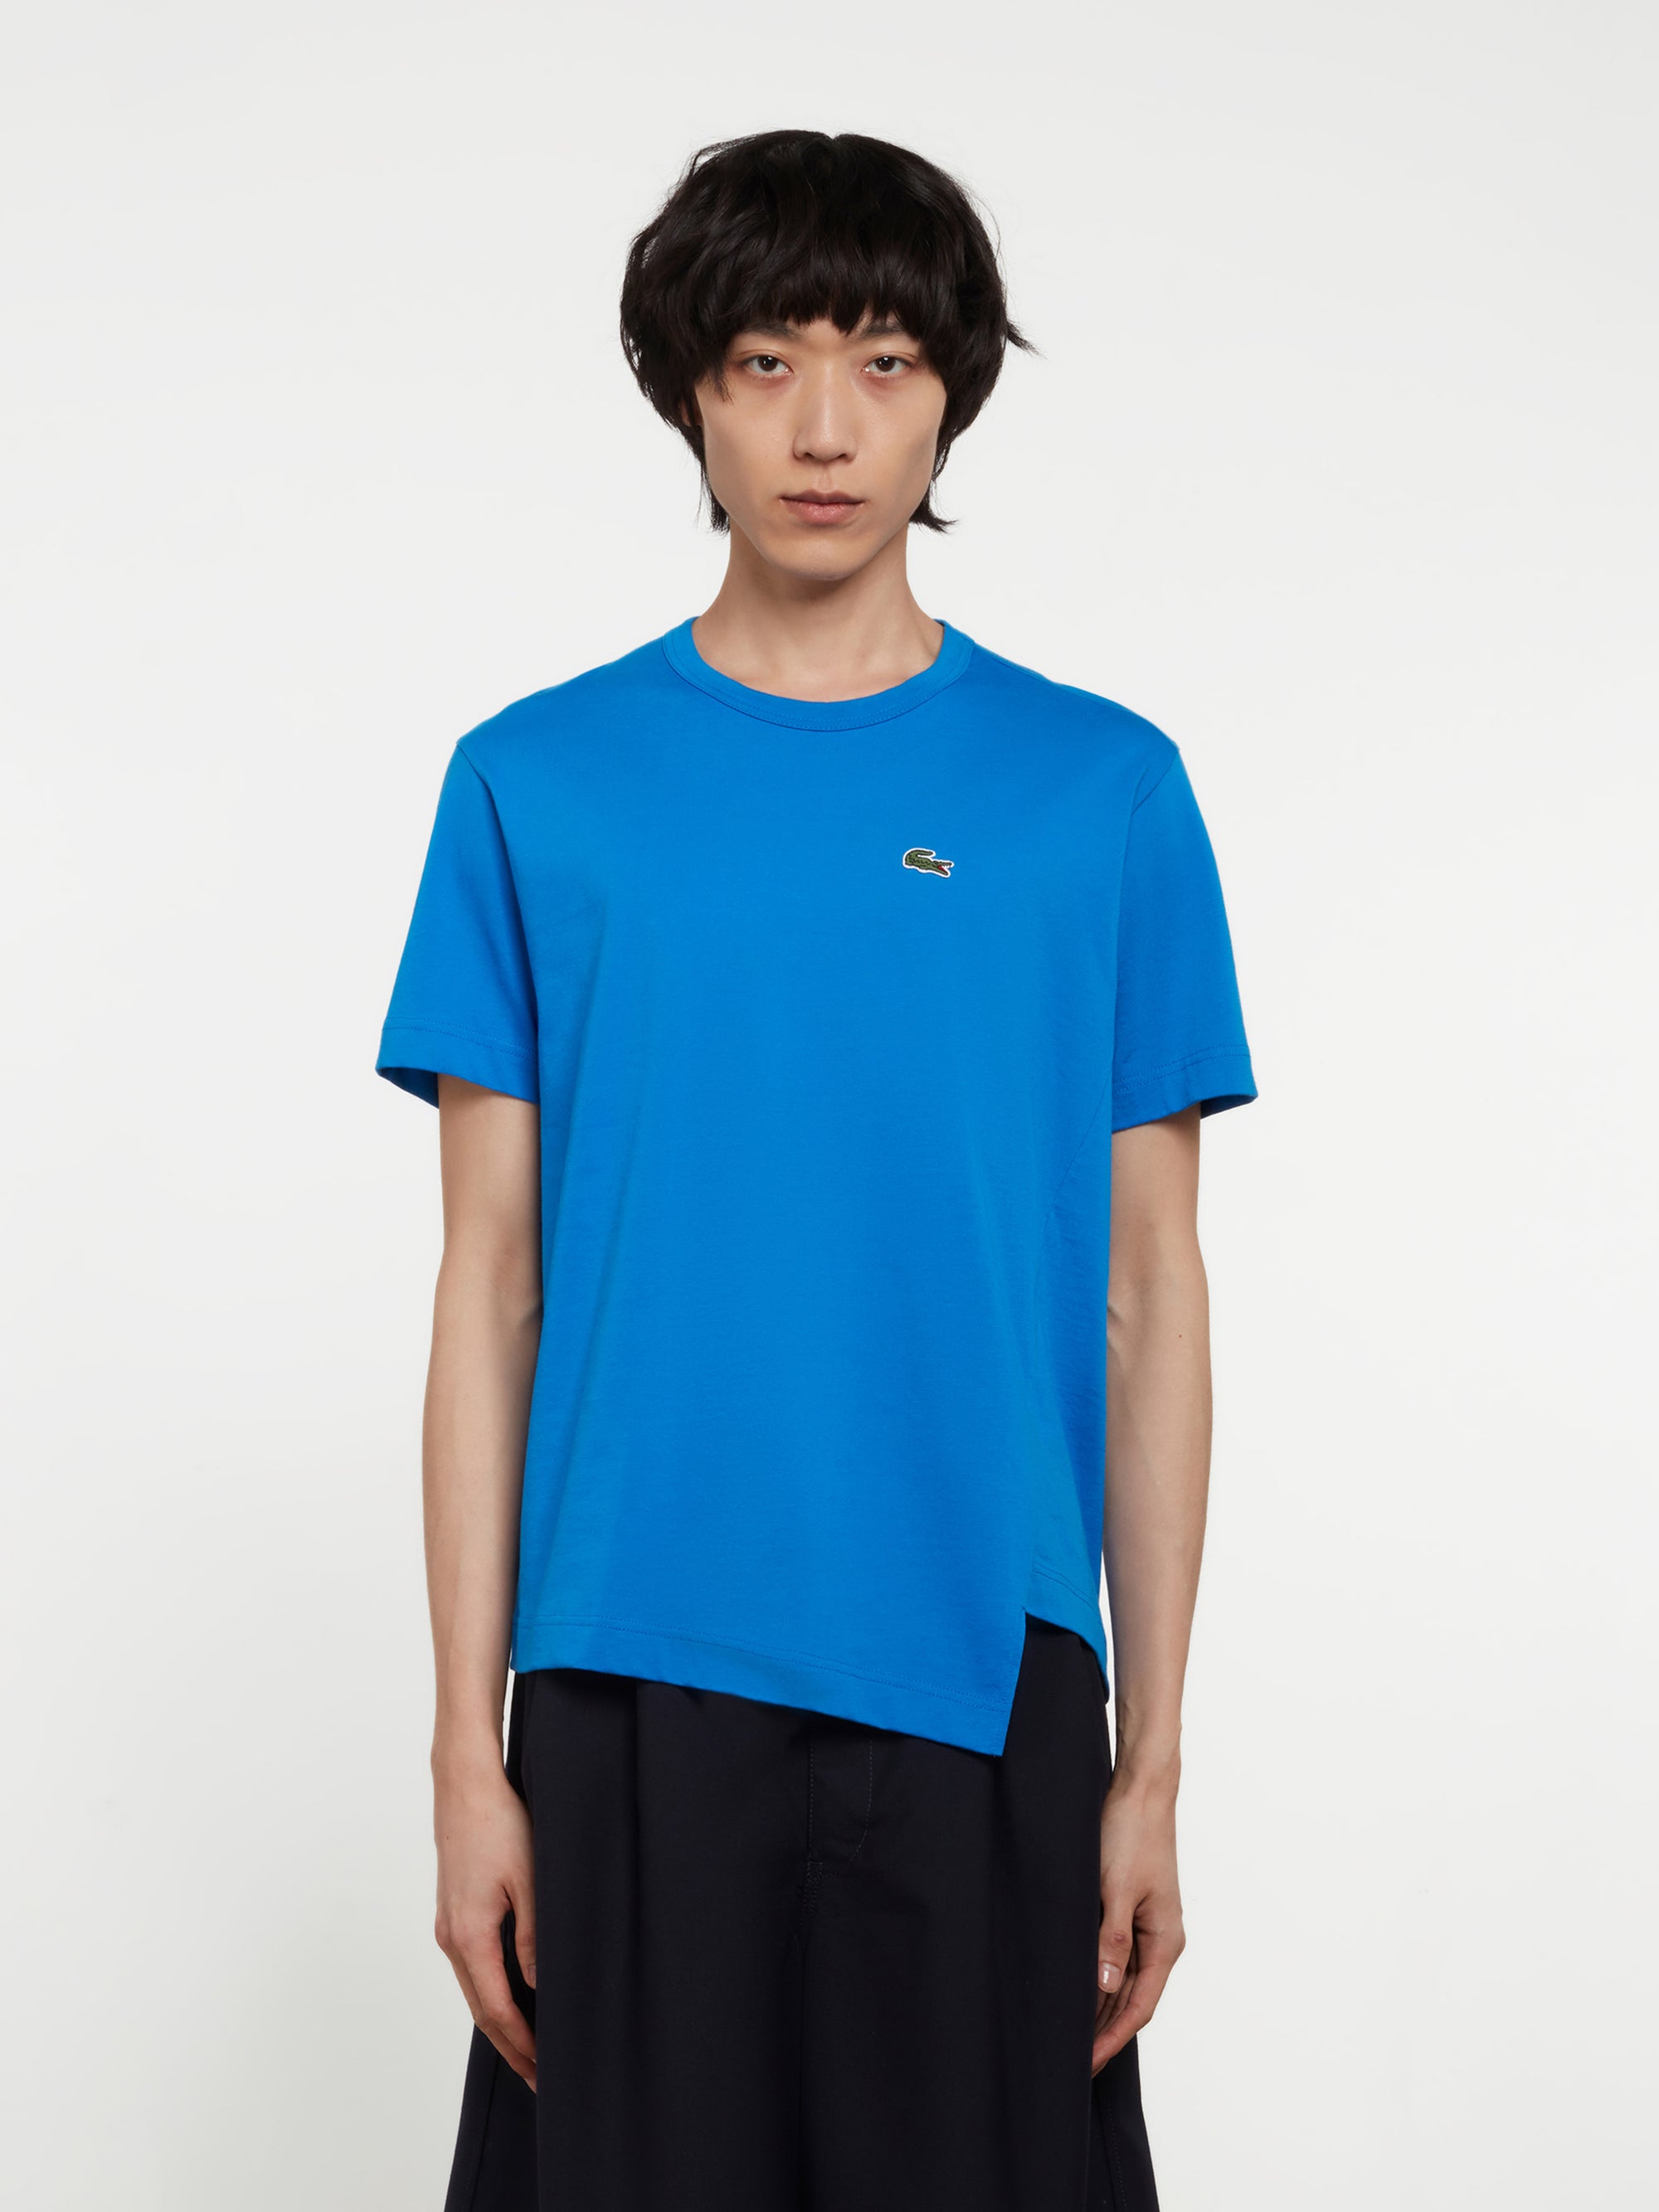 CDG Shirt - Lacoste Men’s T-Shirt - (Blue) view 1